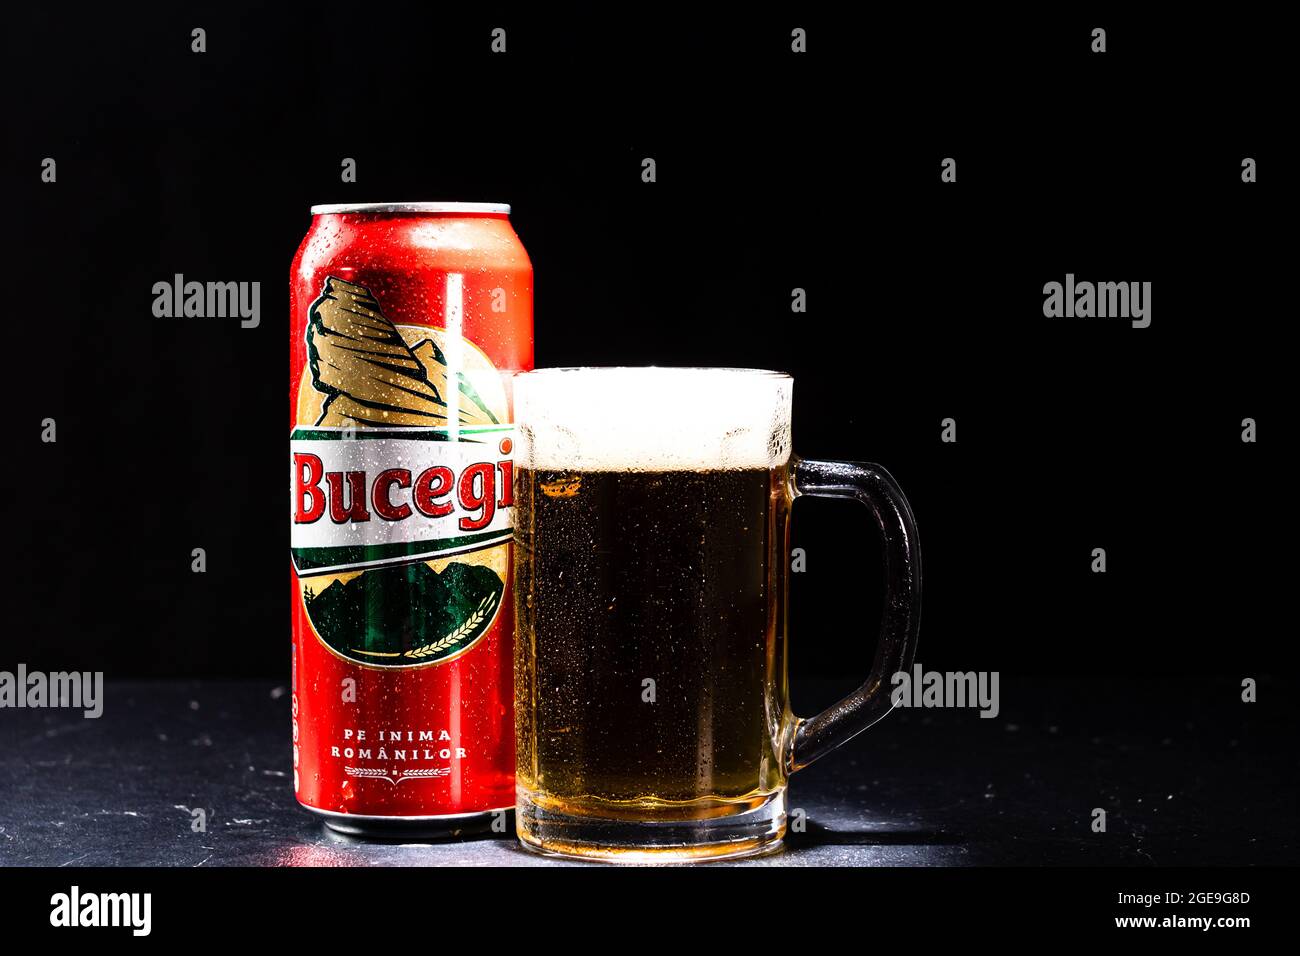 Bucegi Bier. Rumänisches Bier in Bukarest, Rumänien, 2021 Stockfotografie -  Alamy